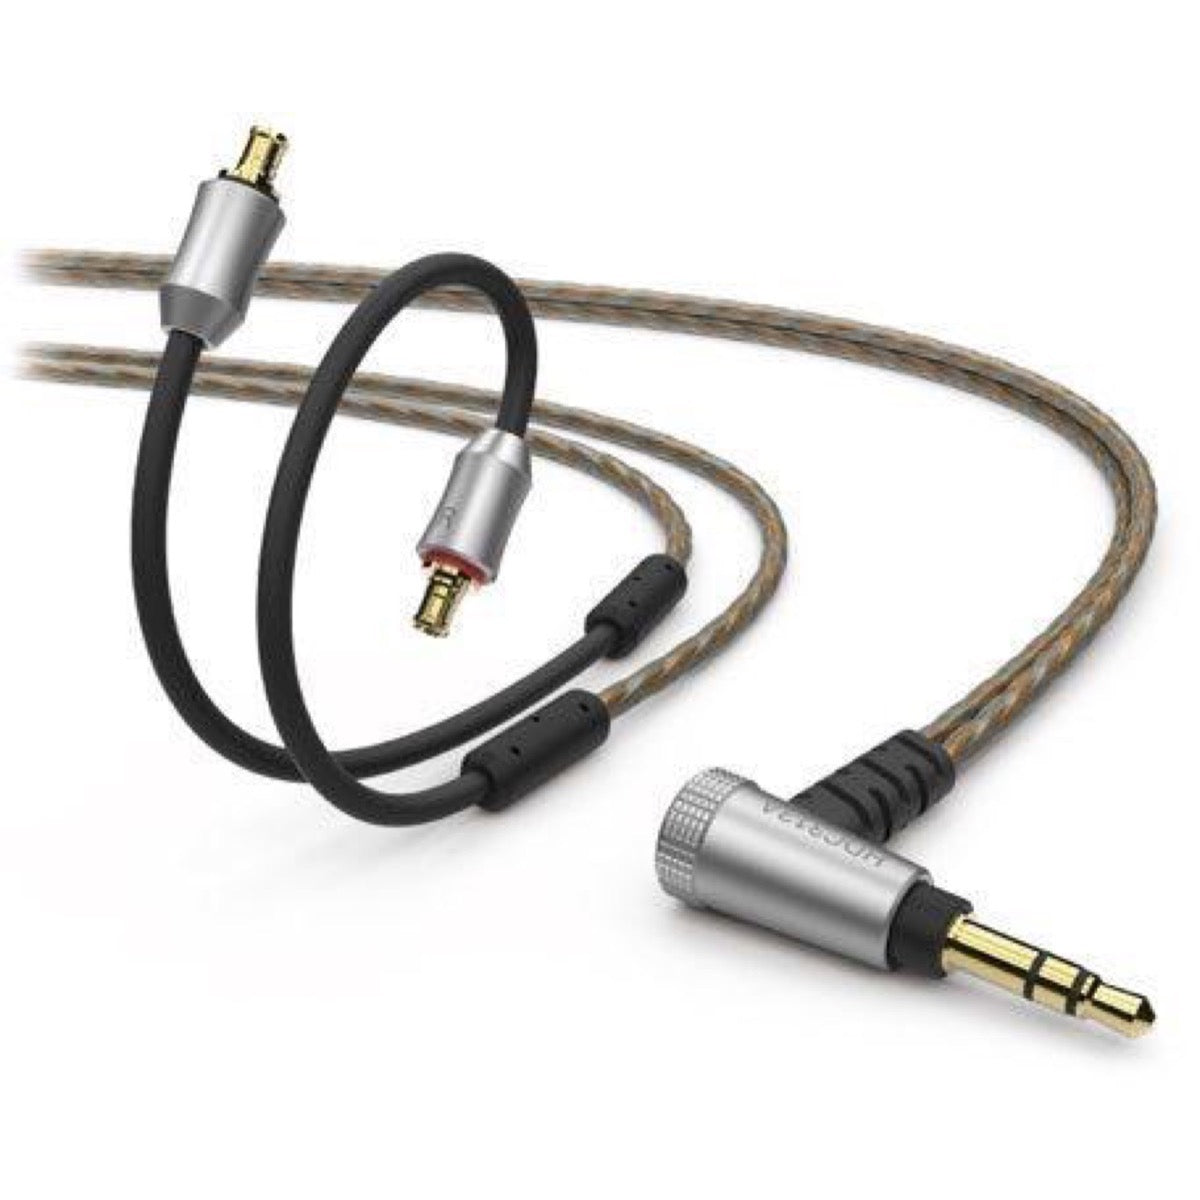 Audio-Technica HDC313A/1.2 Detachable Headphone Cable